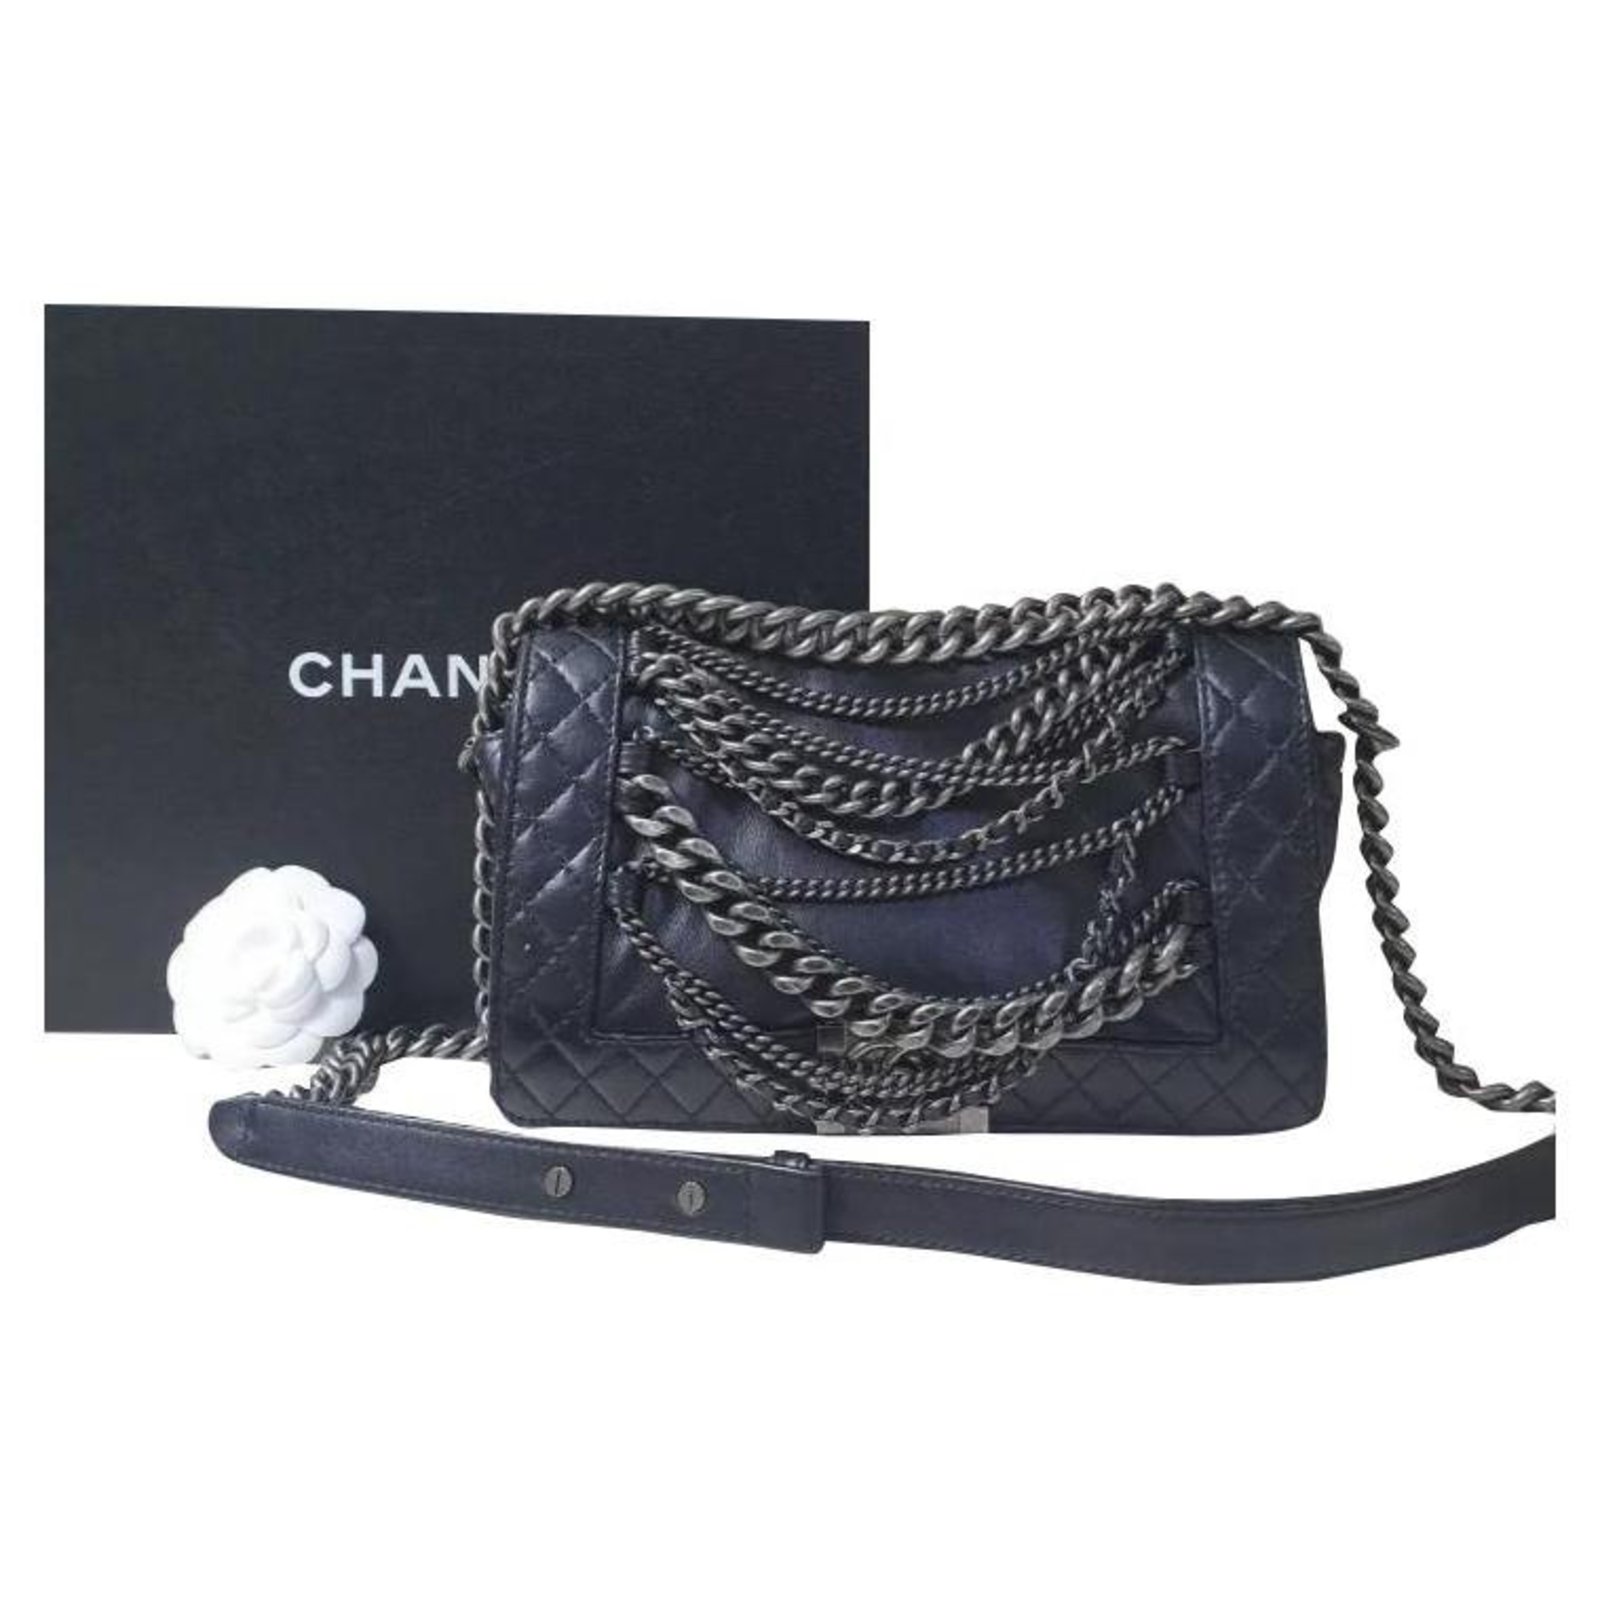 Chanel Medium Boy Flap Calf Leather Shoulder Bag Black